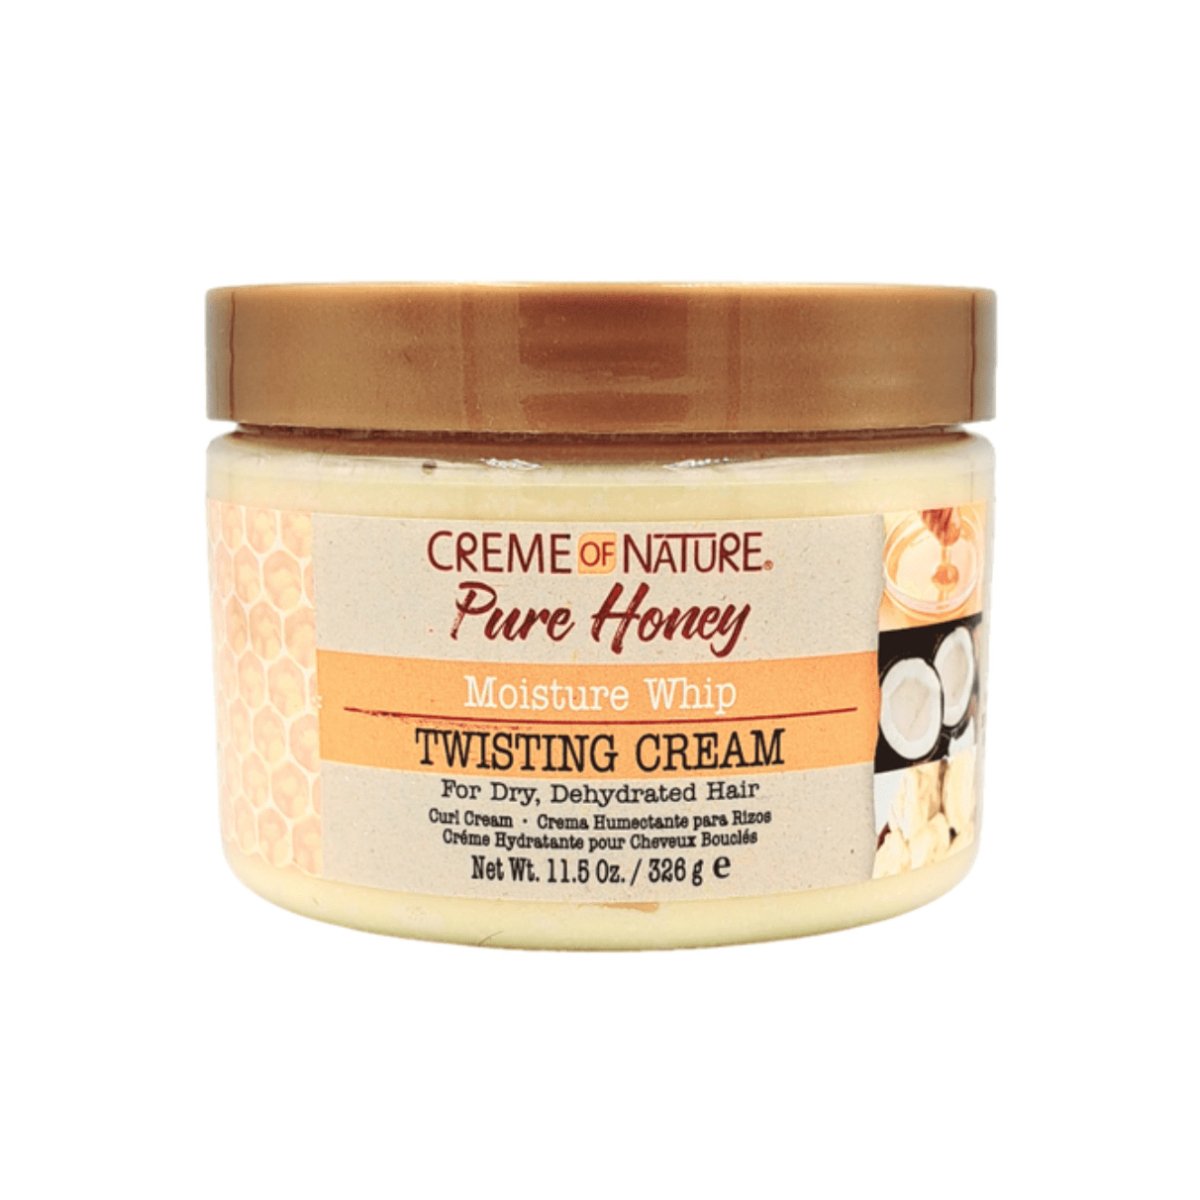 Creme of Nature Pure Honey Moisture Whip Twisting Cream 326g - CosFair GmbH